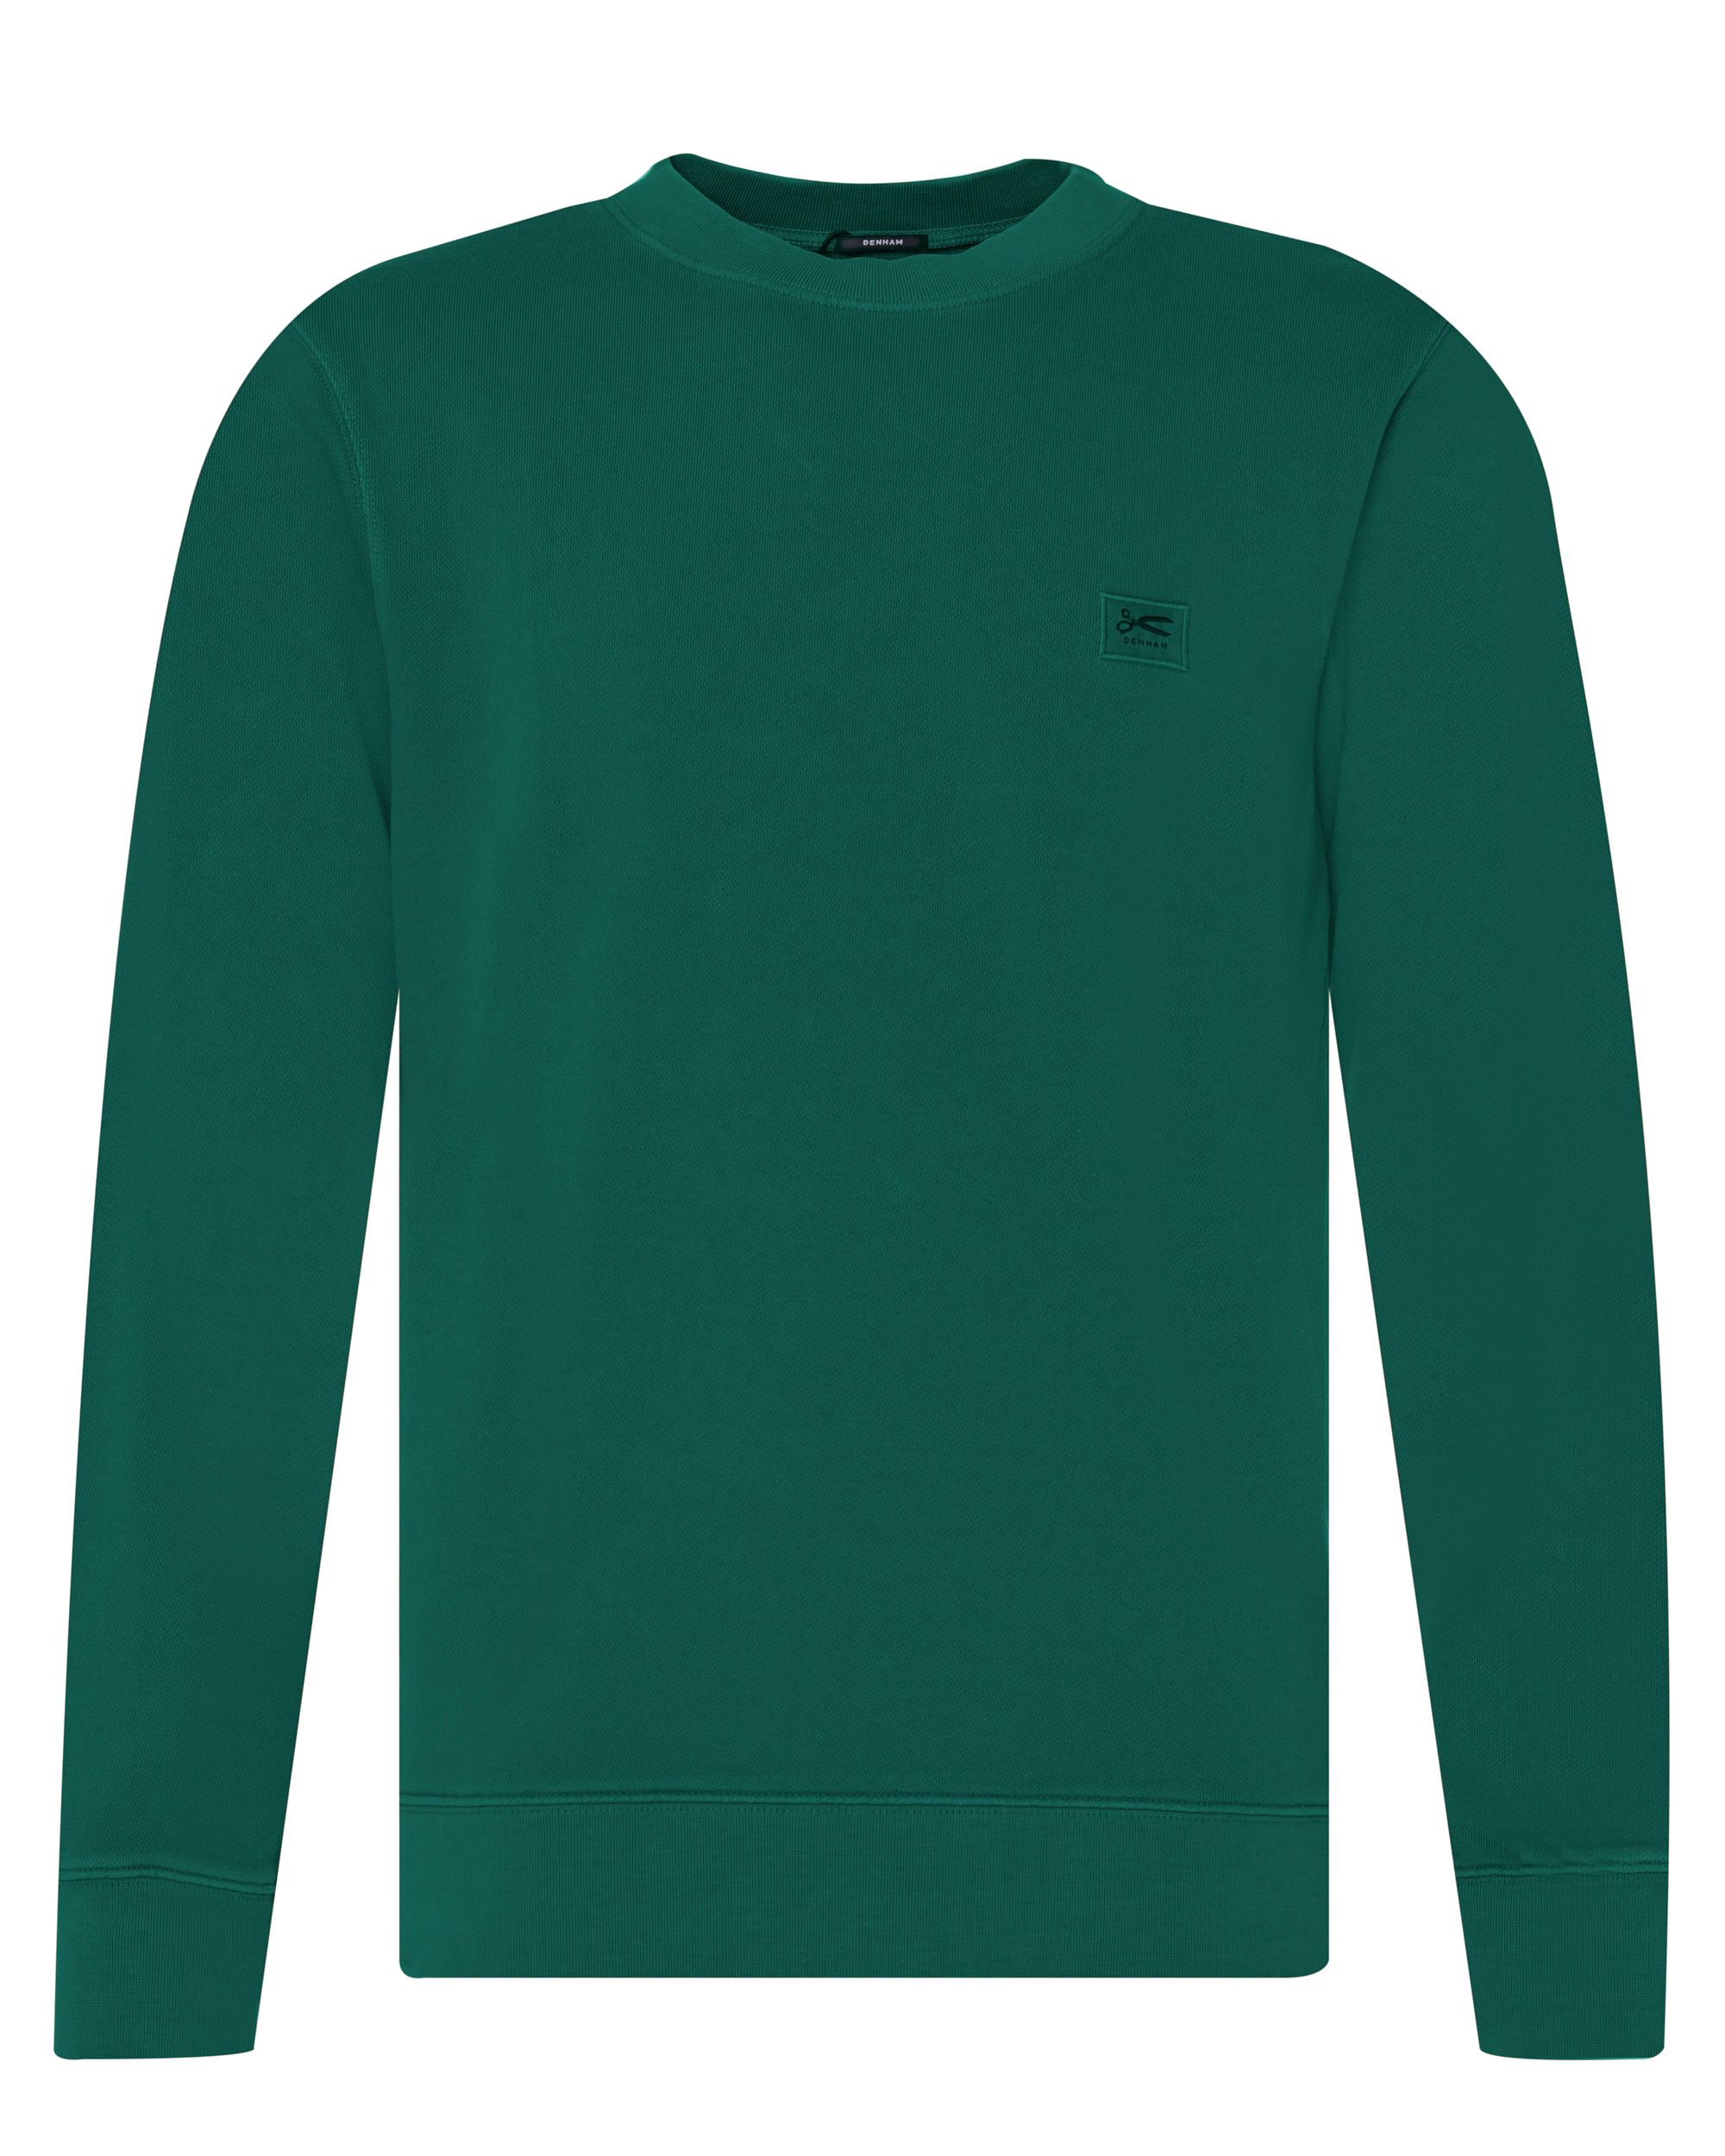 DENHAM Applique Sweater Groen 081323-001-L